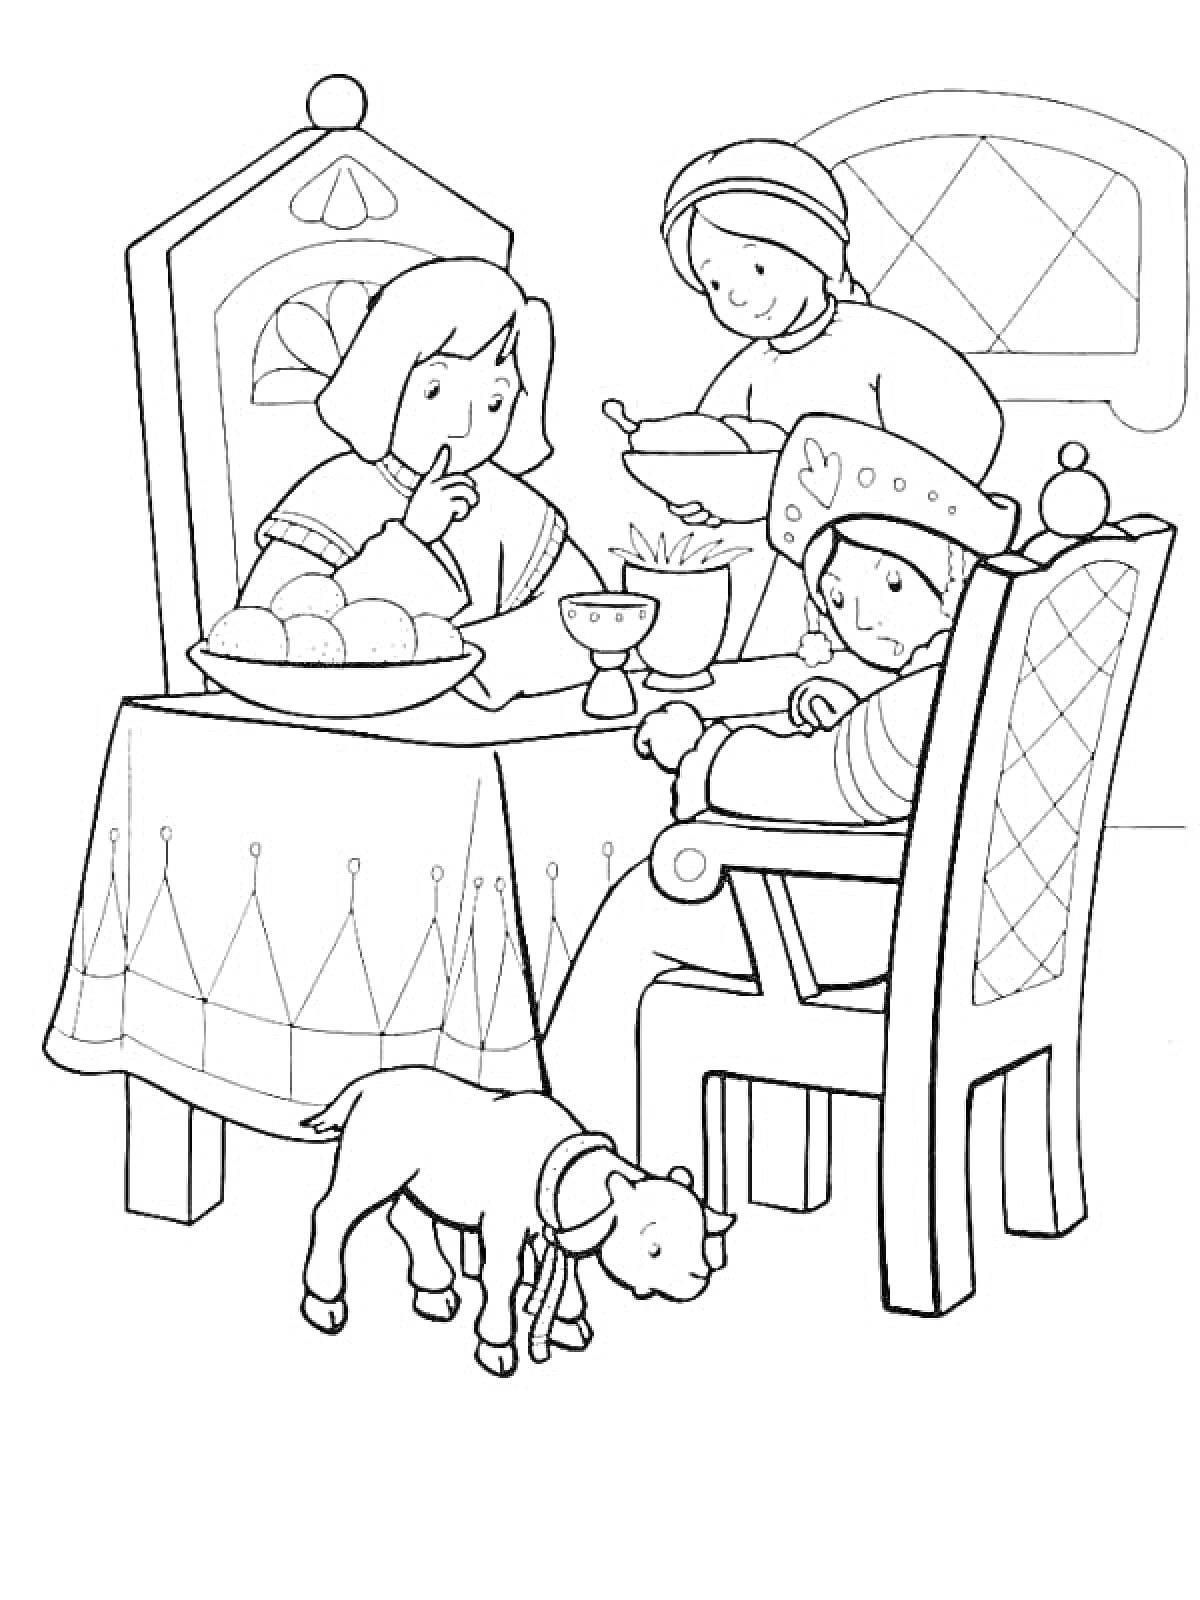  Сестрица Аленушка и братец Иванушка за столом, женщина подаёт им еду, на столе тарелка с буханками, козлёнок под столом